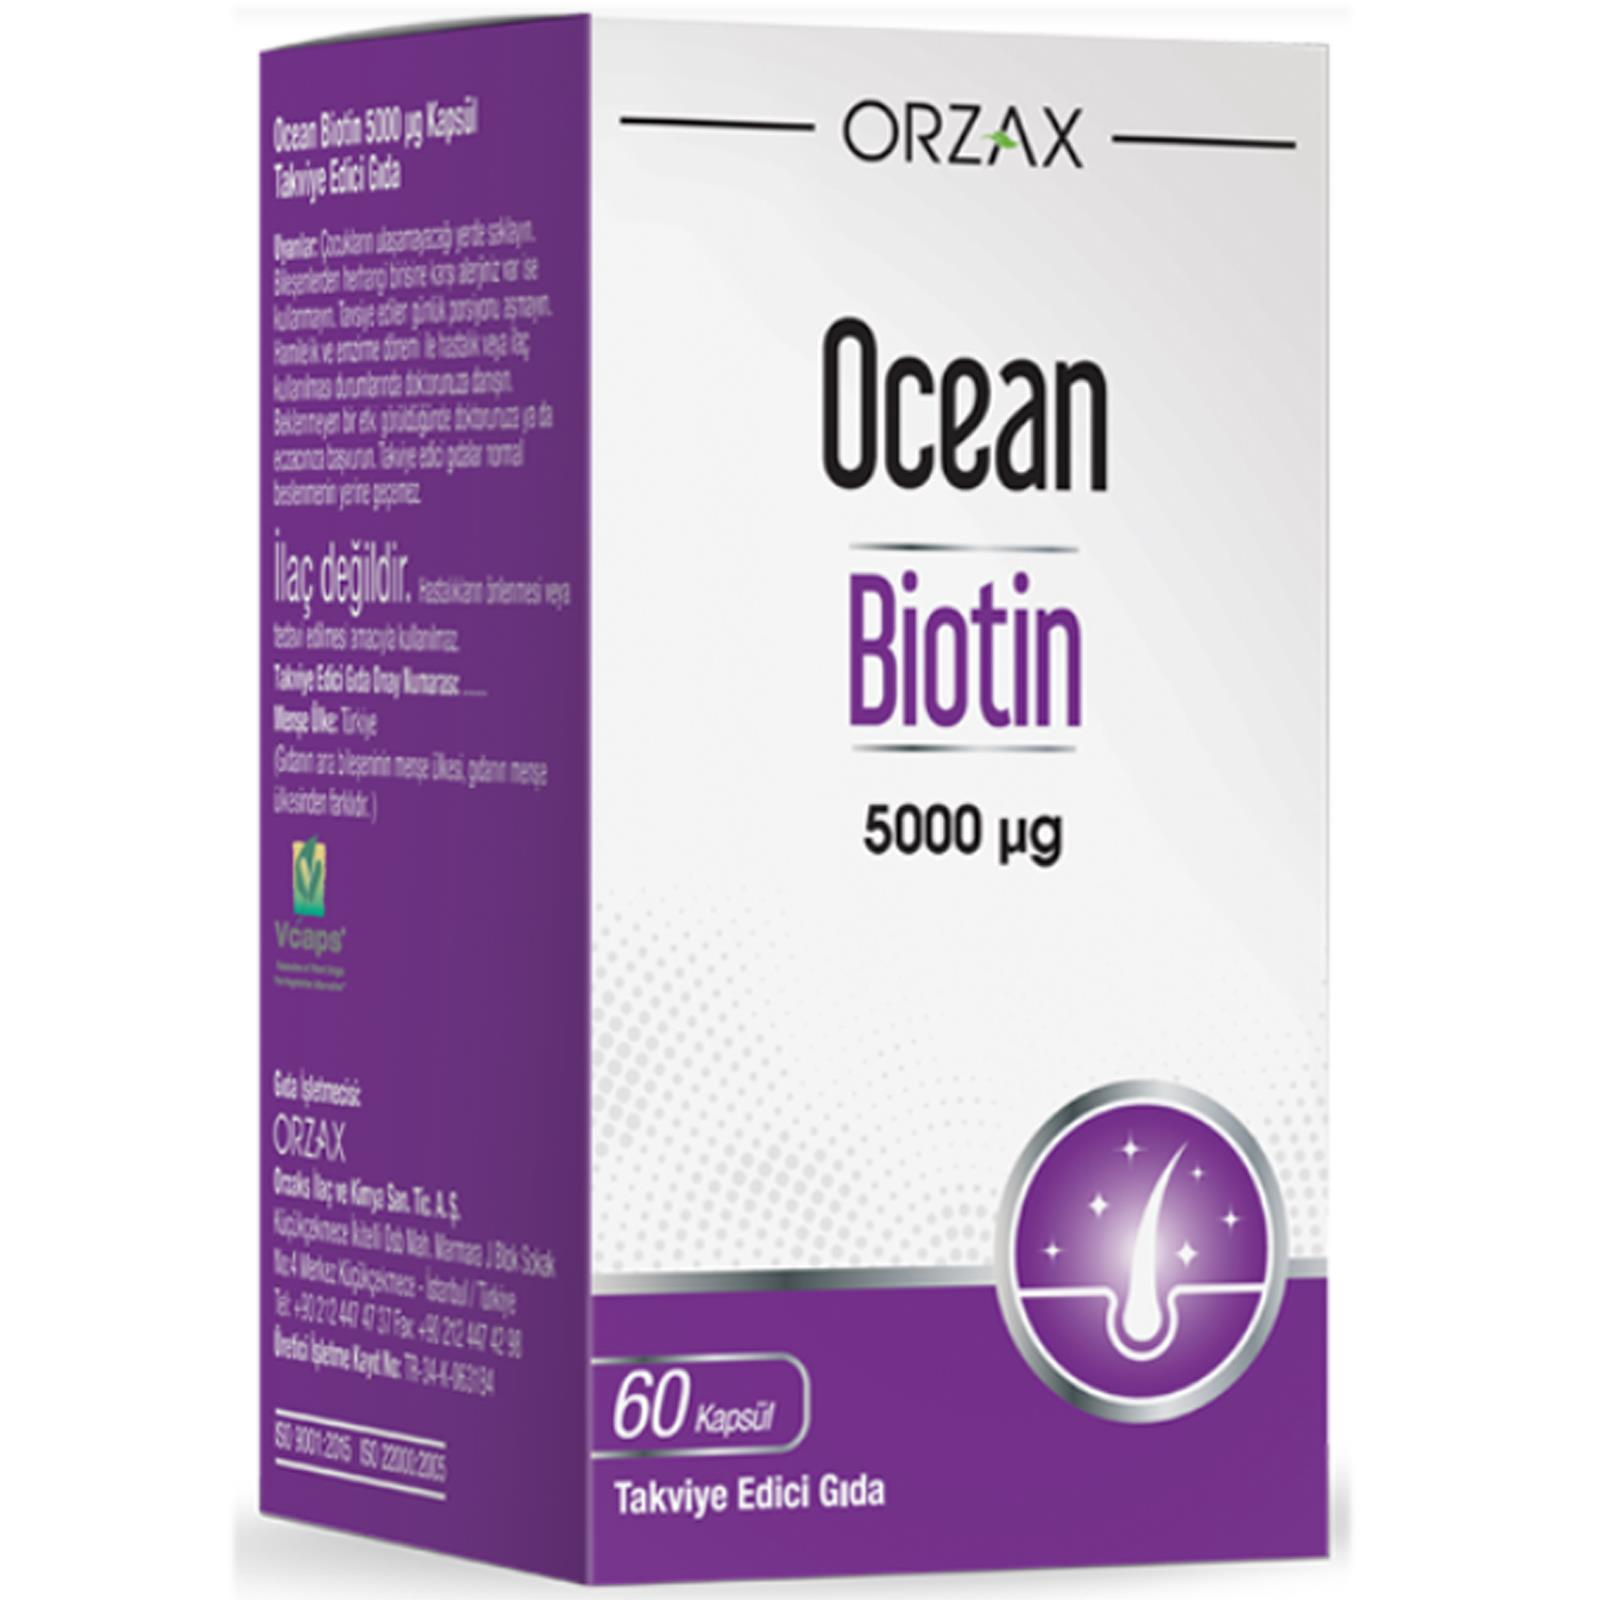 Ocean Biotin 5000 mcg 60 Kapsül